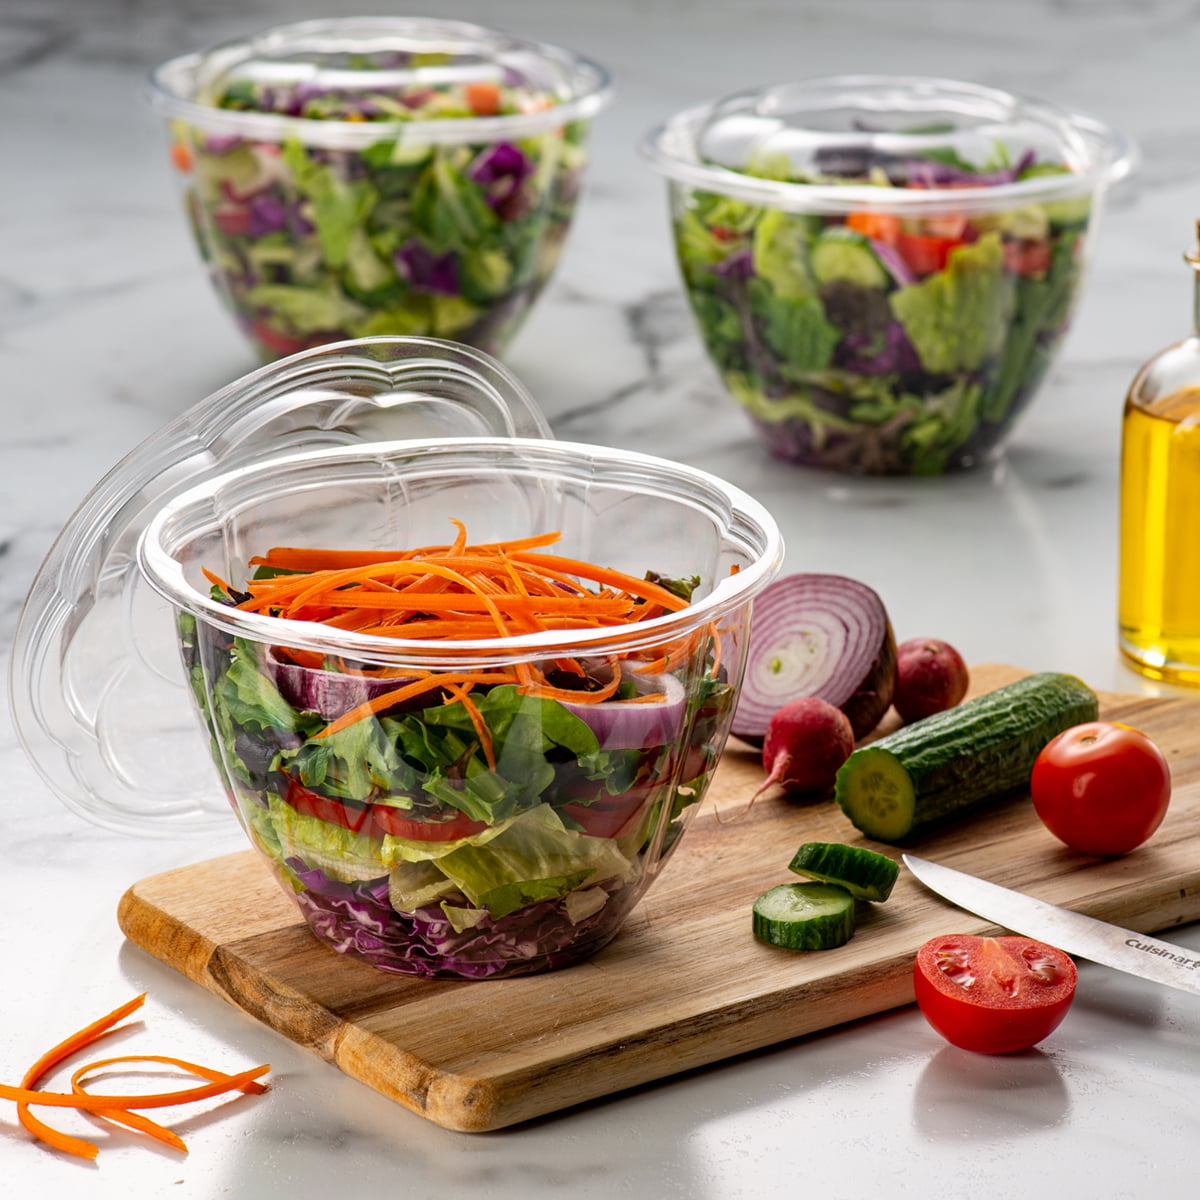 POPMISOLER 252 Pack Clear Plastic Salad Bowls with Lids Disposable,24OZ  Reusable Salad Bowl with Lid,Disposable Salad Bowls with Lids,Salad To Go